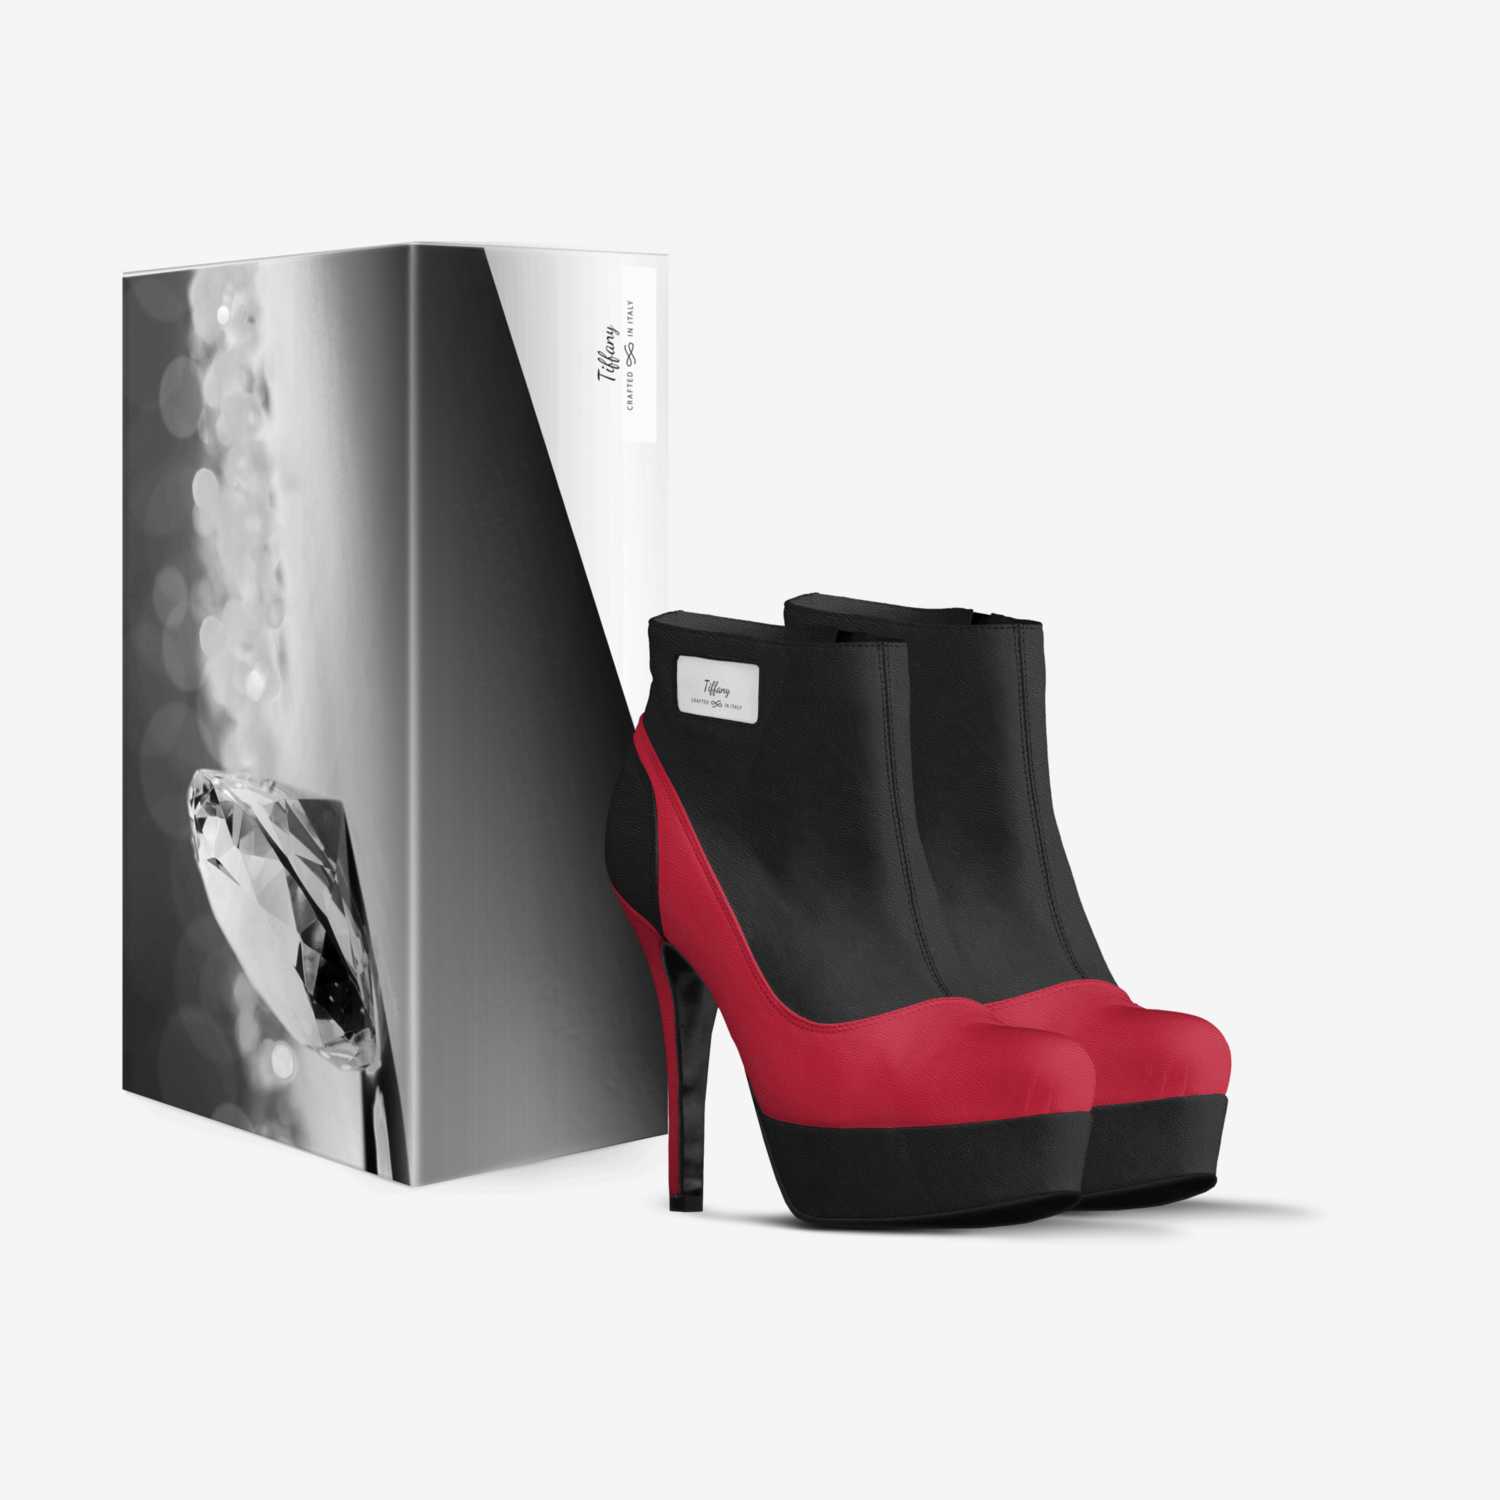 Tiffany custom made in Italy shoes by Tiffany Rochelle Wilson | Box view